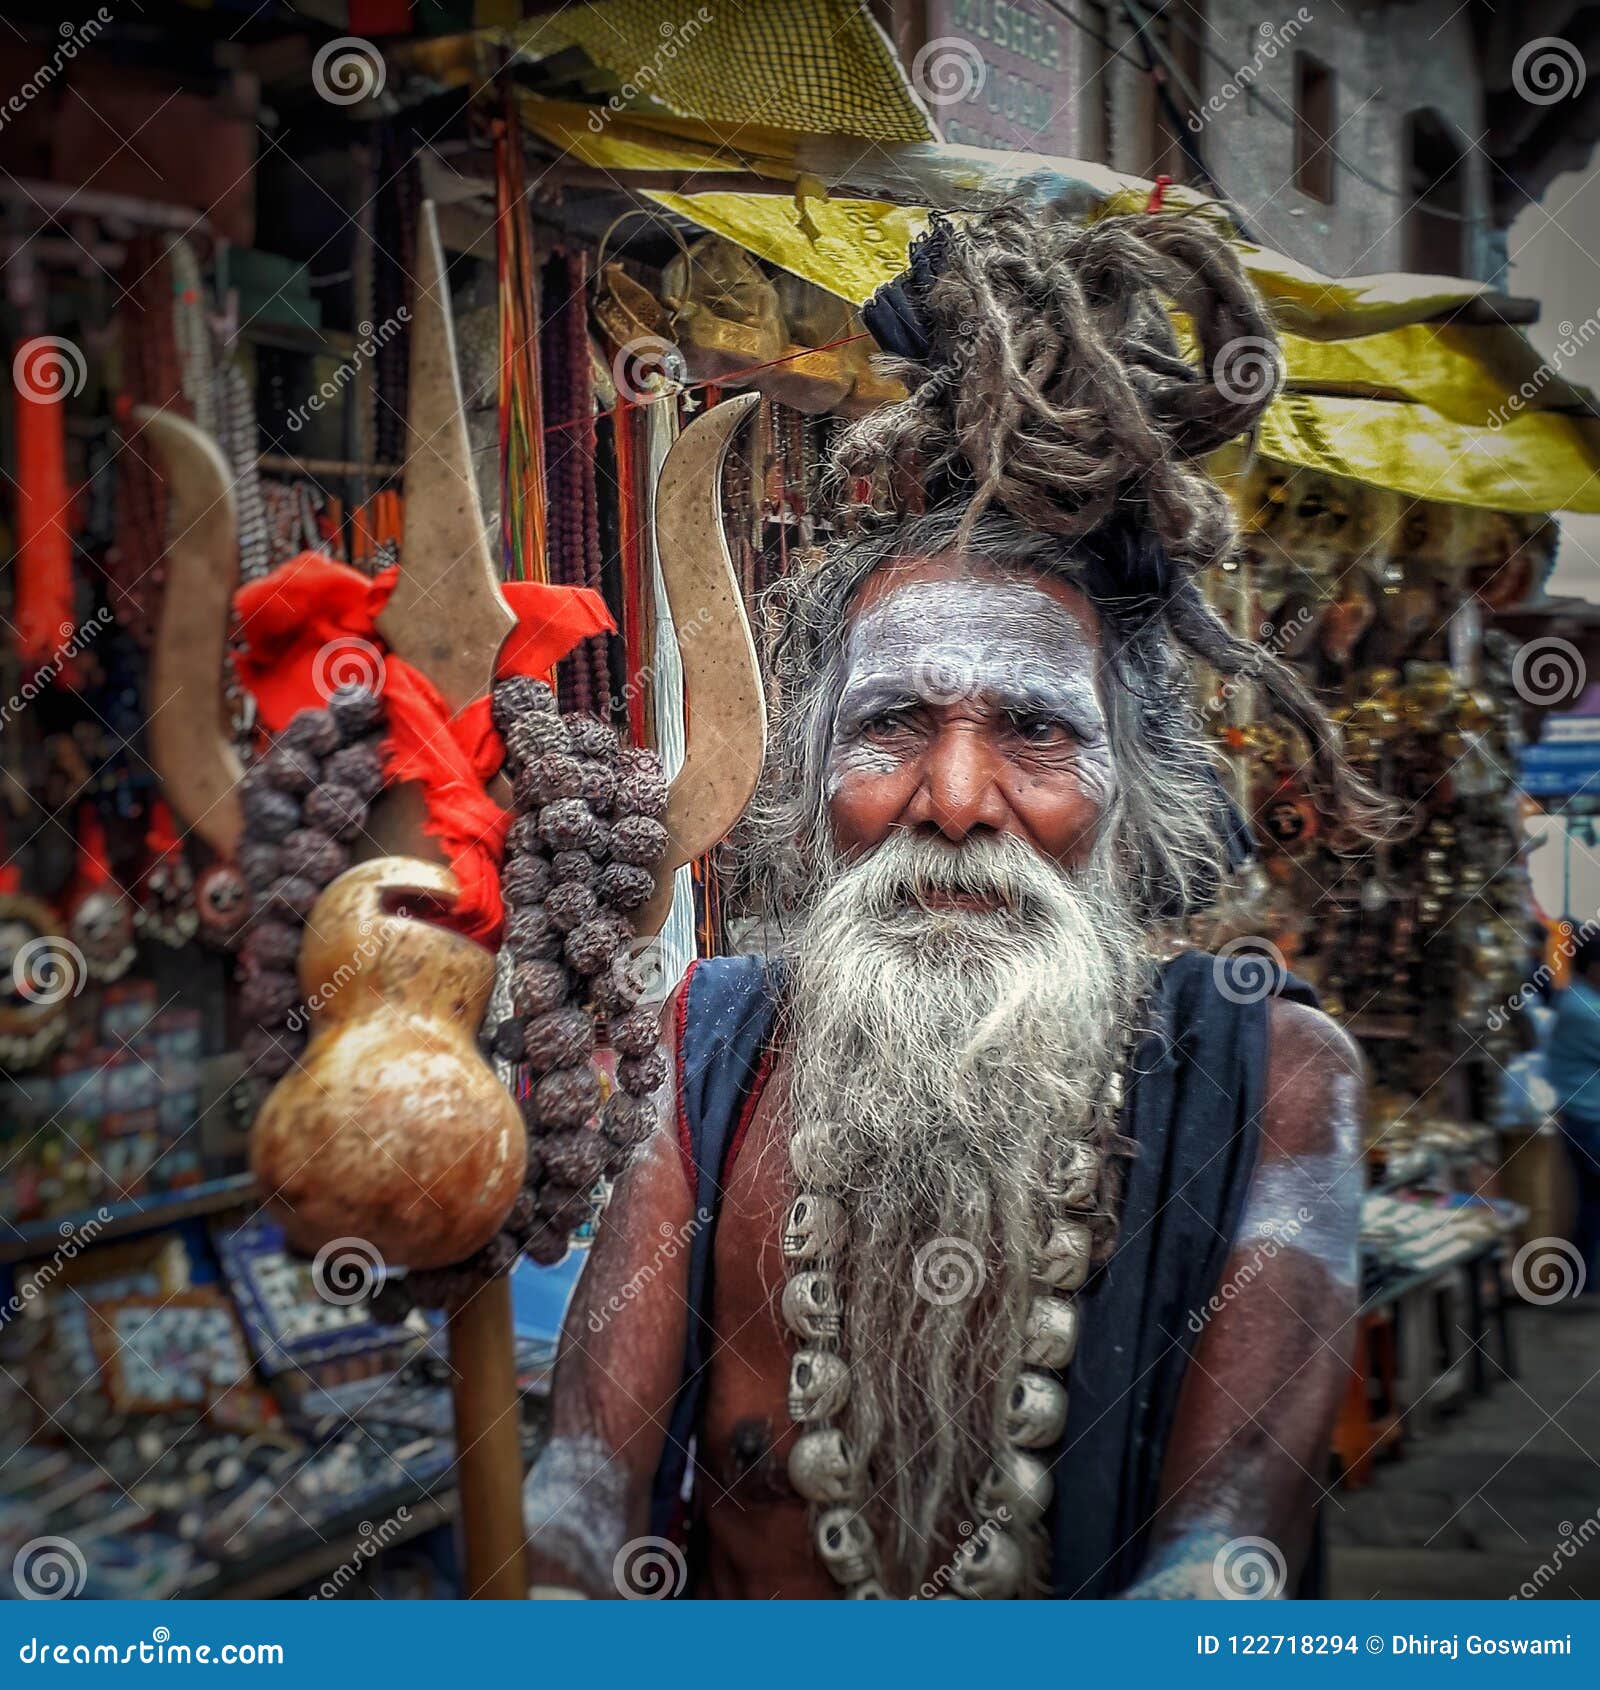 à¤¬à¤¾à¤¬à¤¾à¤“ à¤•à¤¾ à¤¶à¤¹à¤° à¤¬à¤¨à¤¾à¤°à¤¸à¥¤ the Varanasi ...